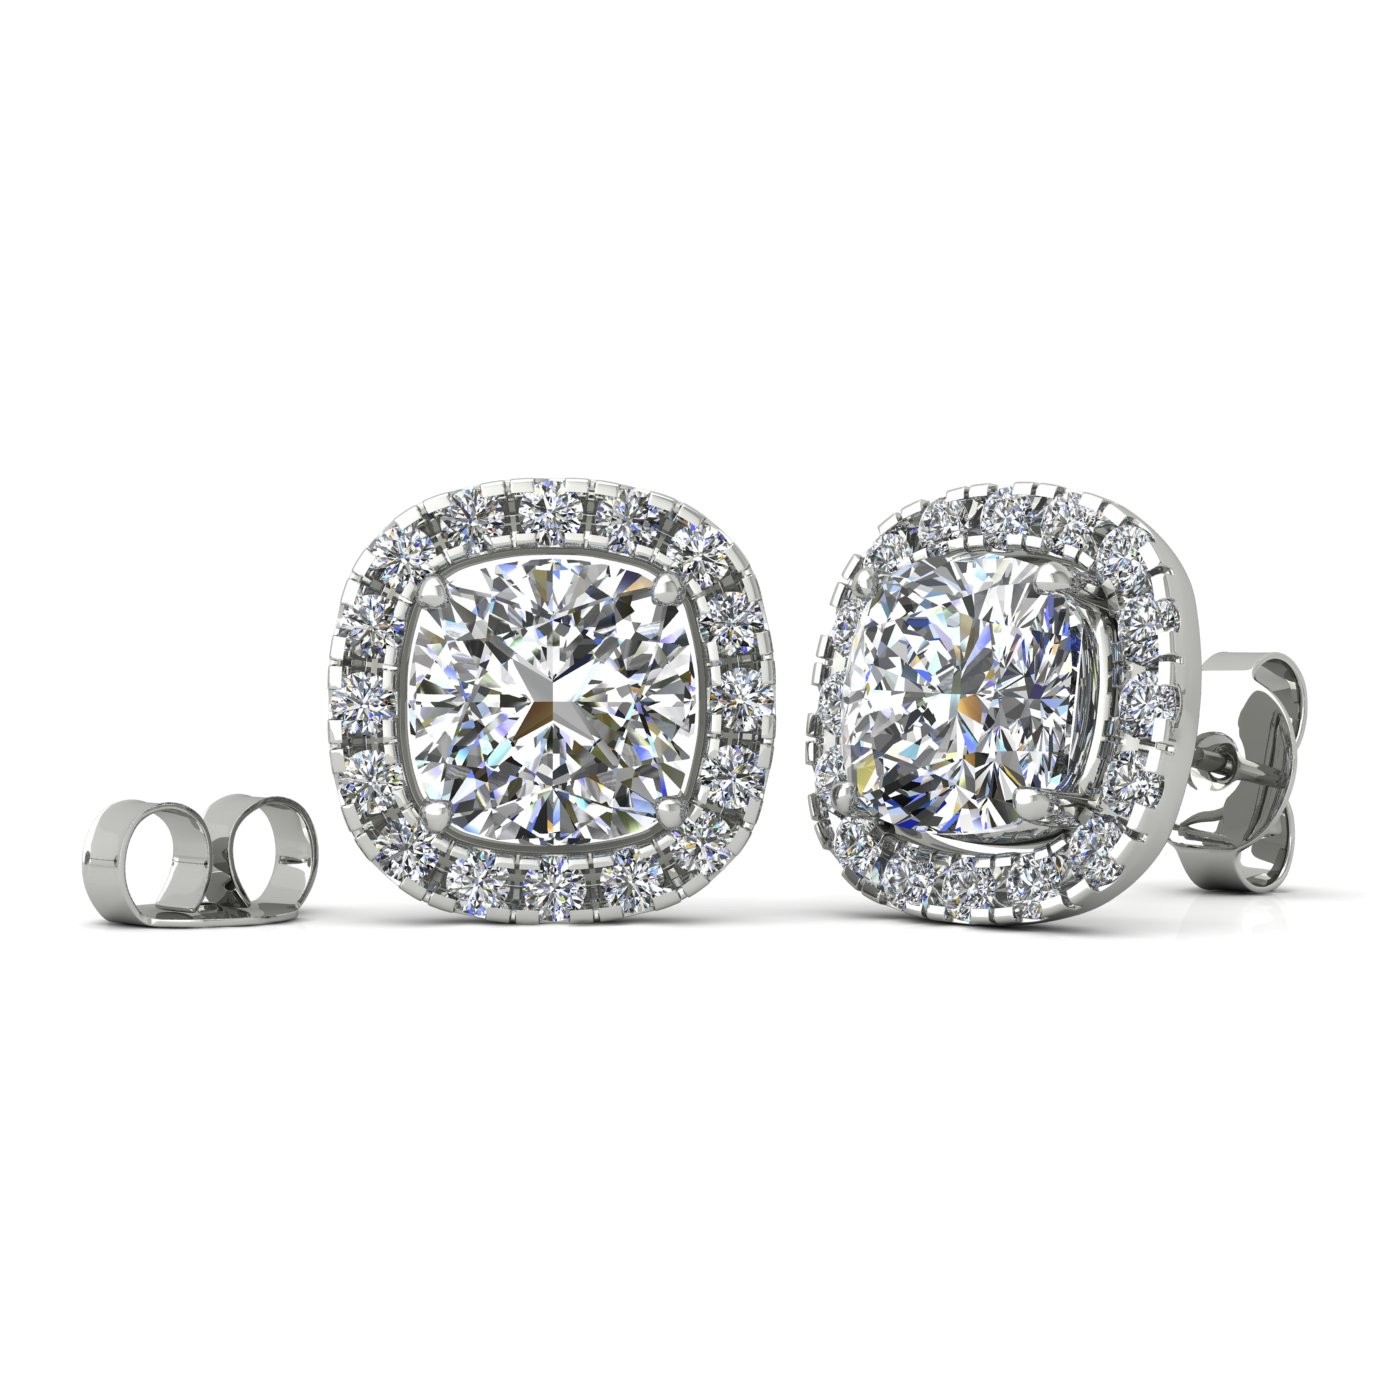 18k white gold  1,5 ct each (3,0 tcw) 4 prongs cushion shape diamond earrings with diamond pavÉ set halo Photos & images